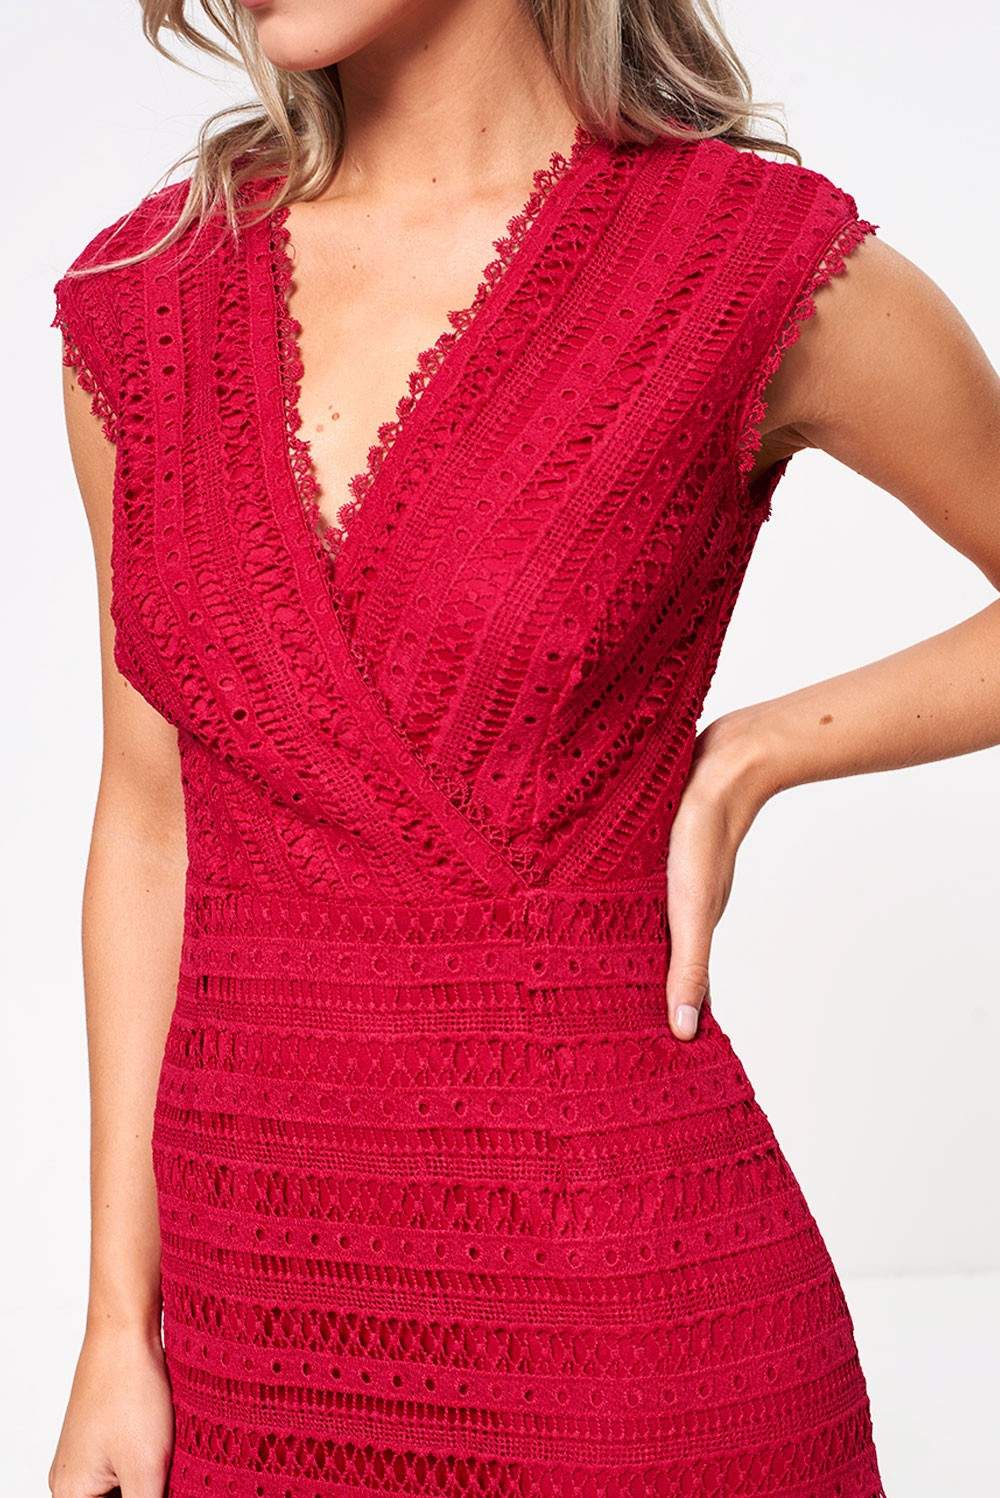 Marc Angelo Tania Crochet Peplum Hem Dress in Berry | iCLOTHING